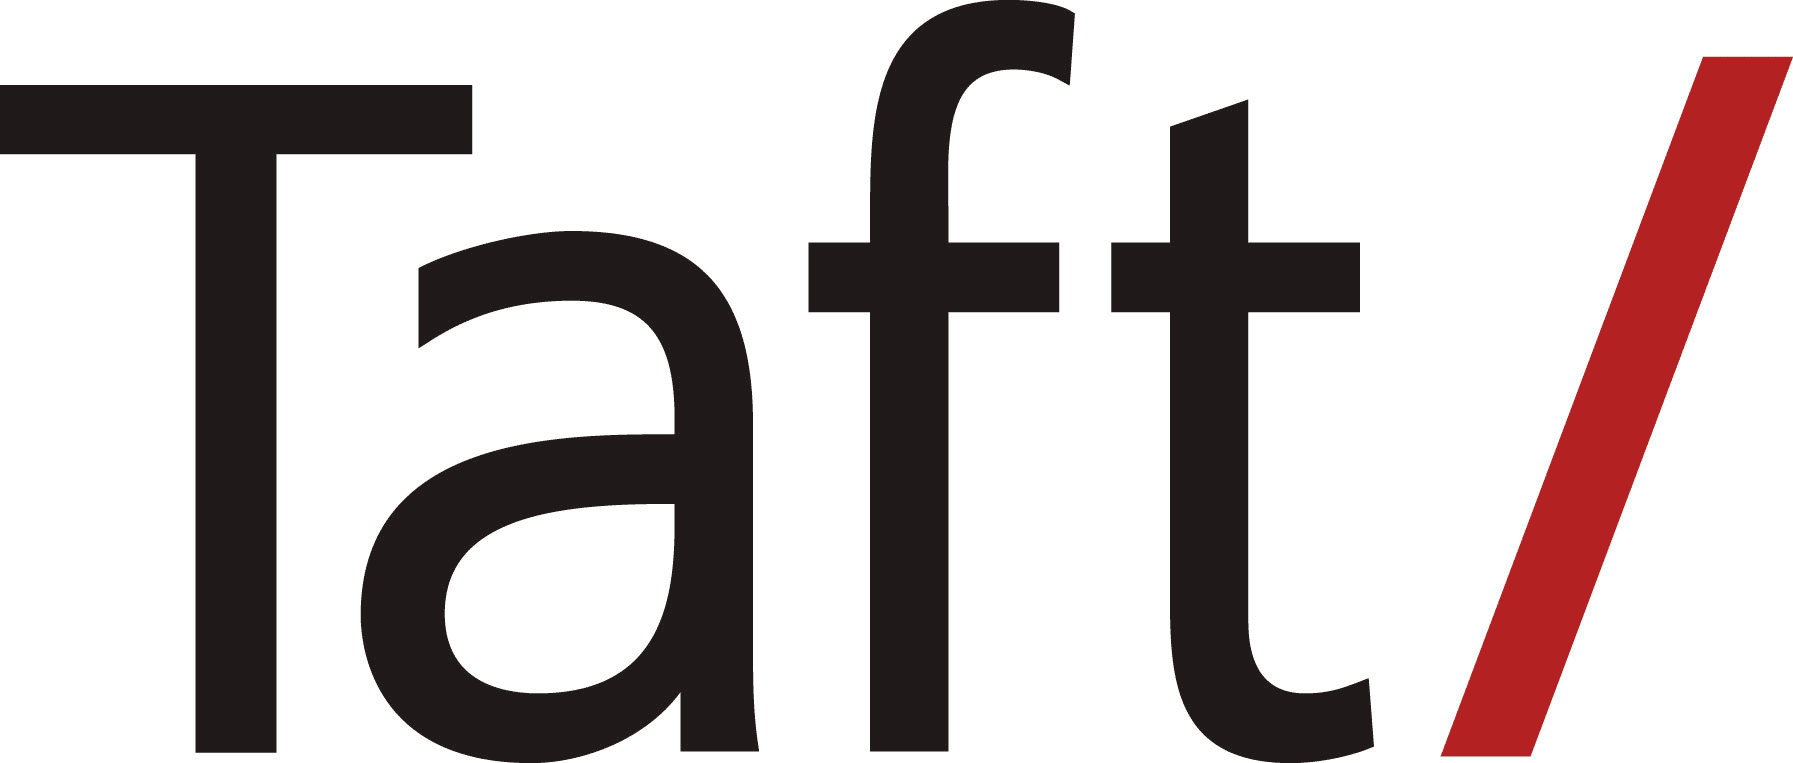 The Taft logo on a white background for franchise marketing.